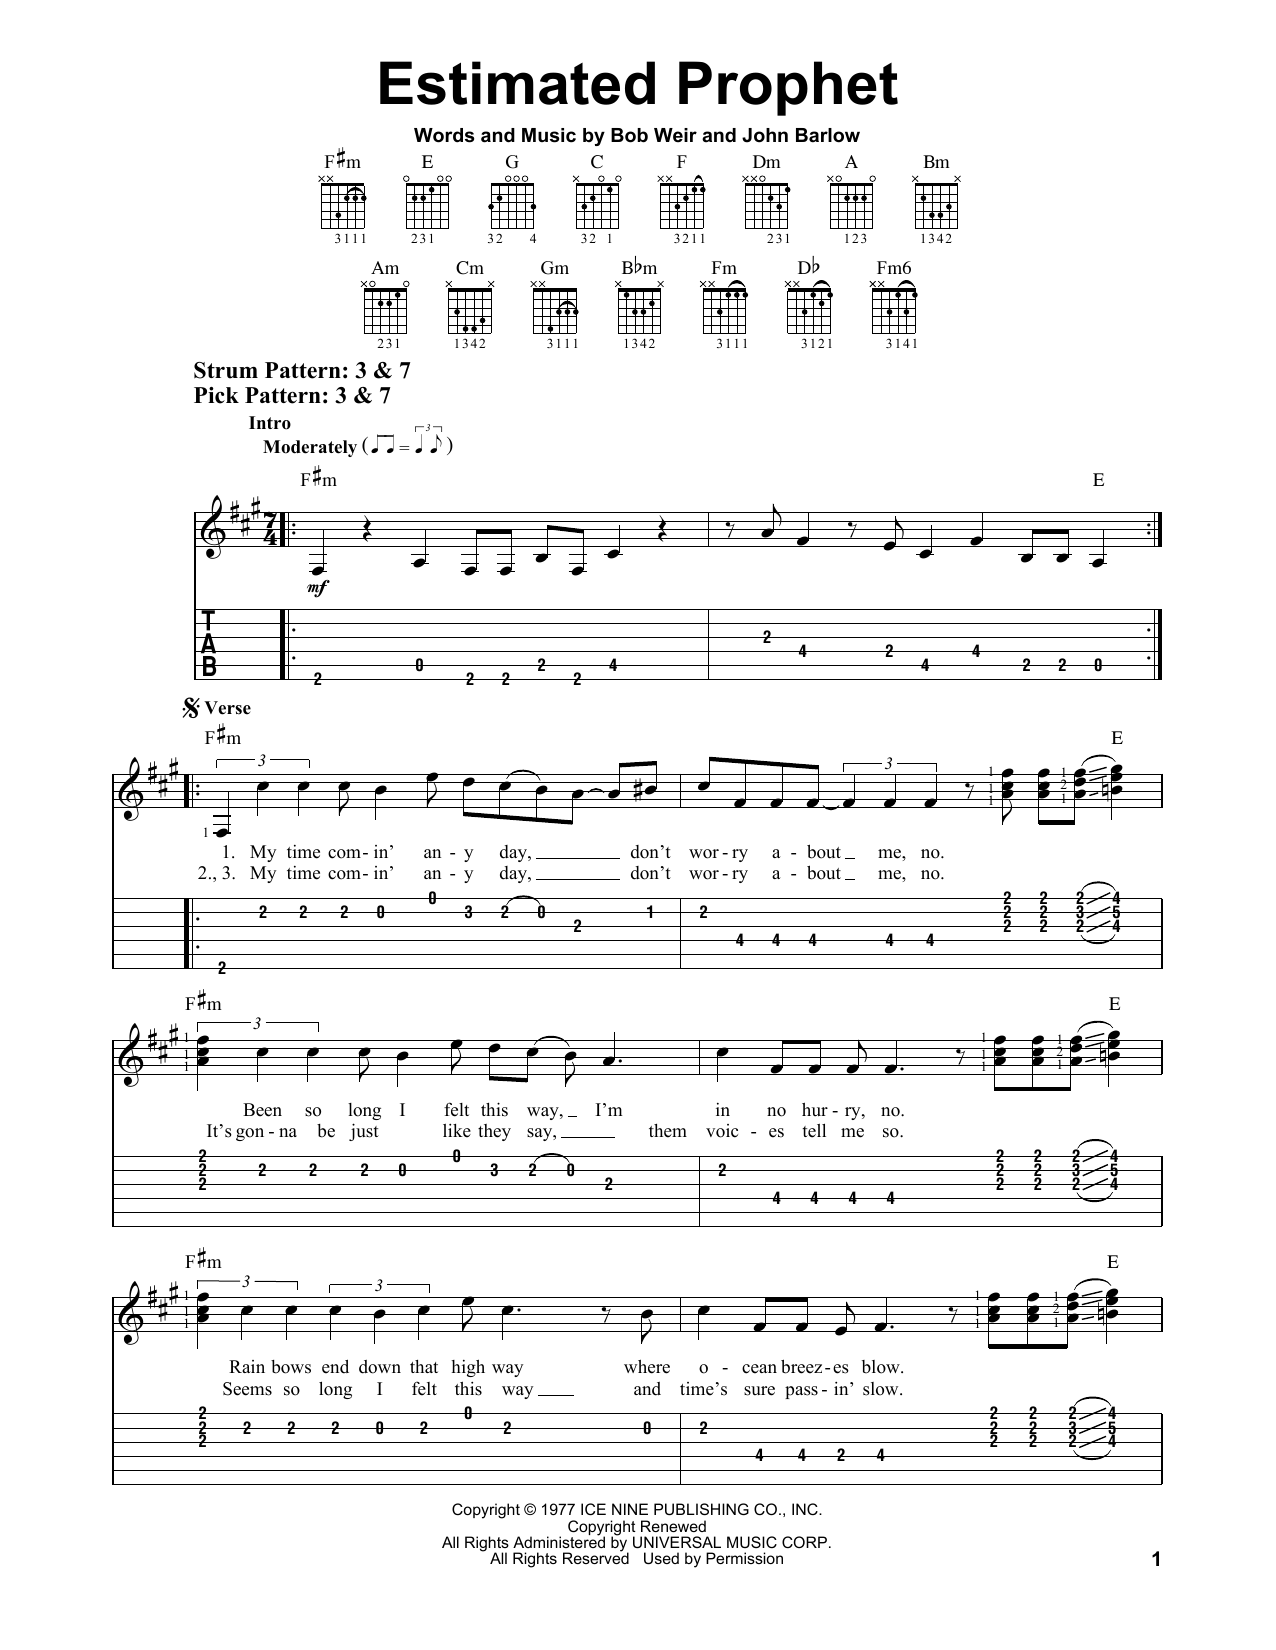 Grateful Dead Estimated Prophet Sheet Music Notes & Chords for Easy Guitar Tab - Download or Print PDF